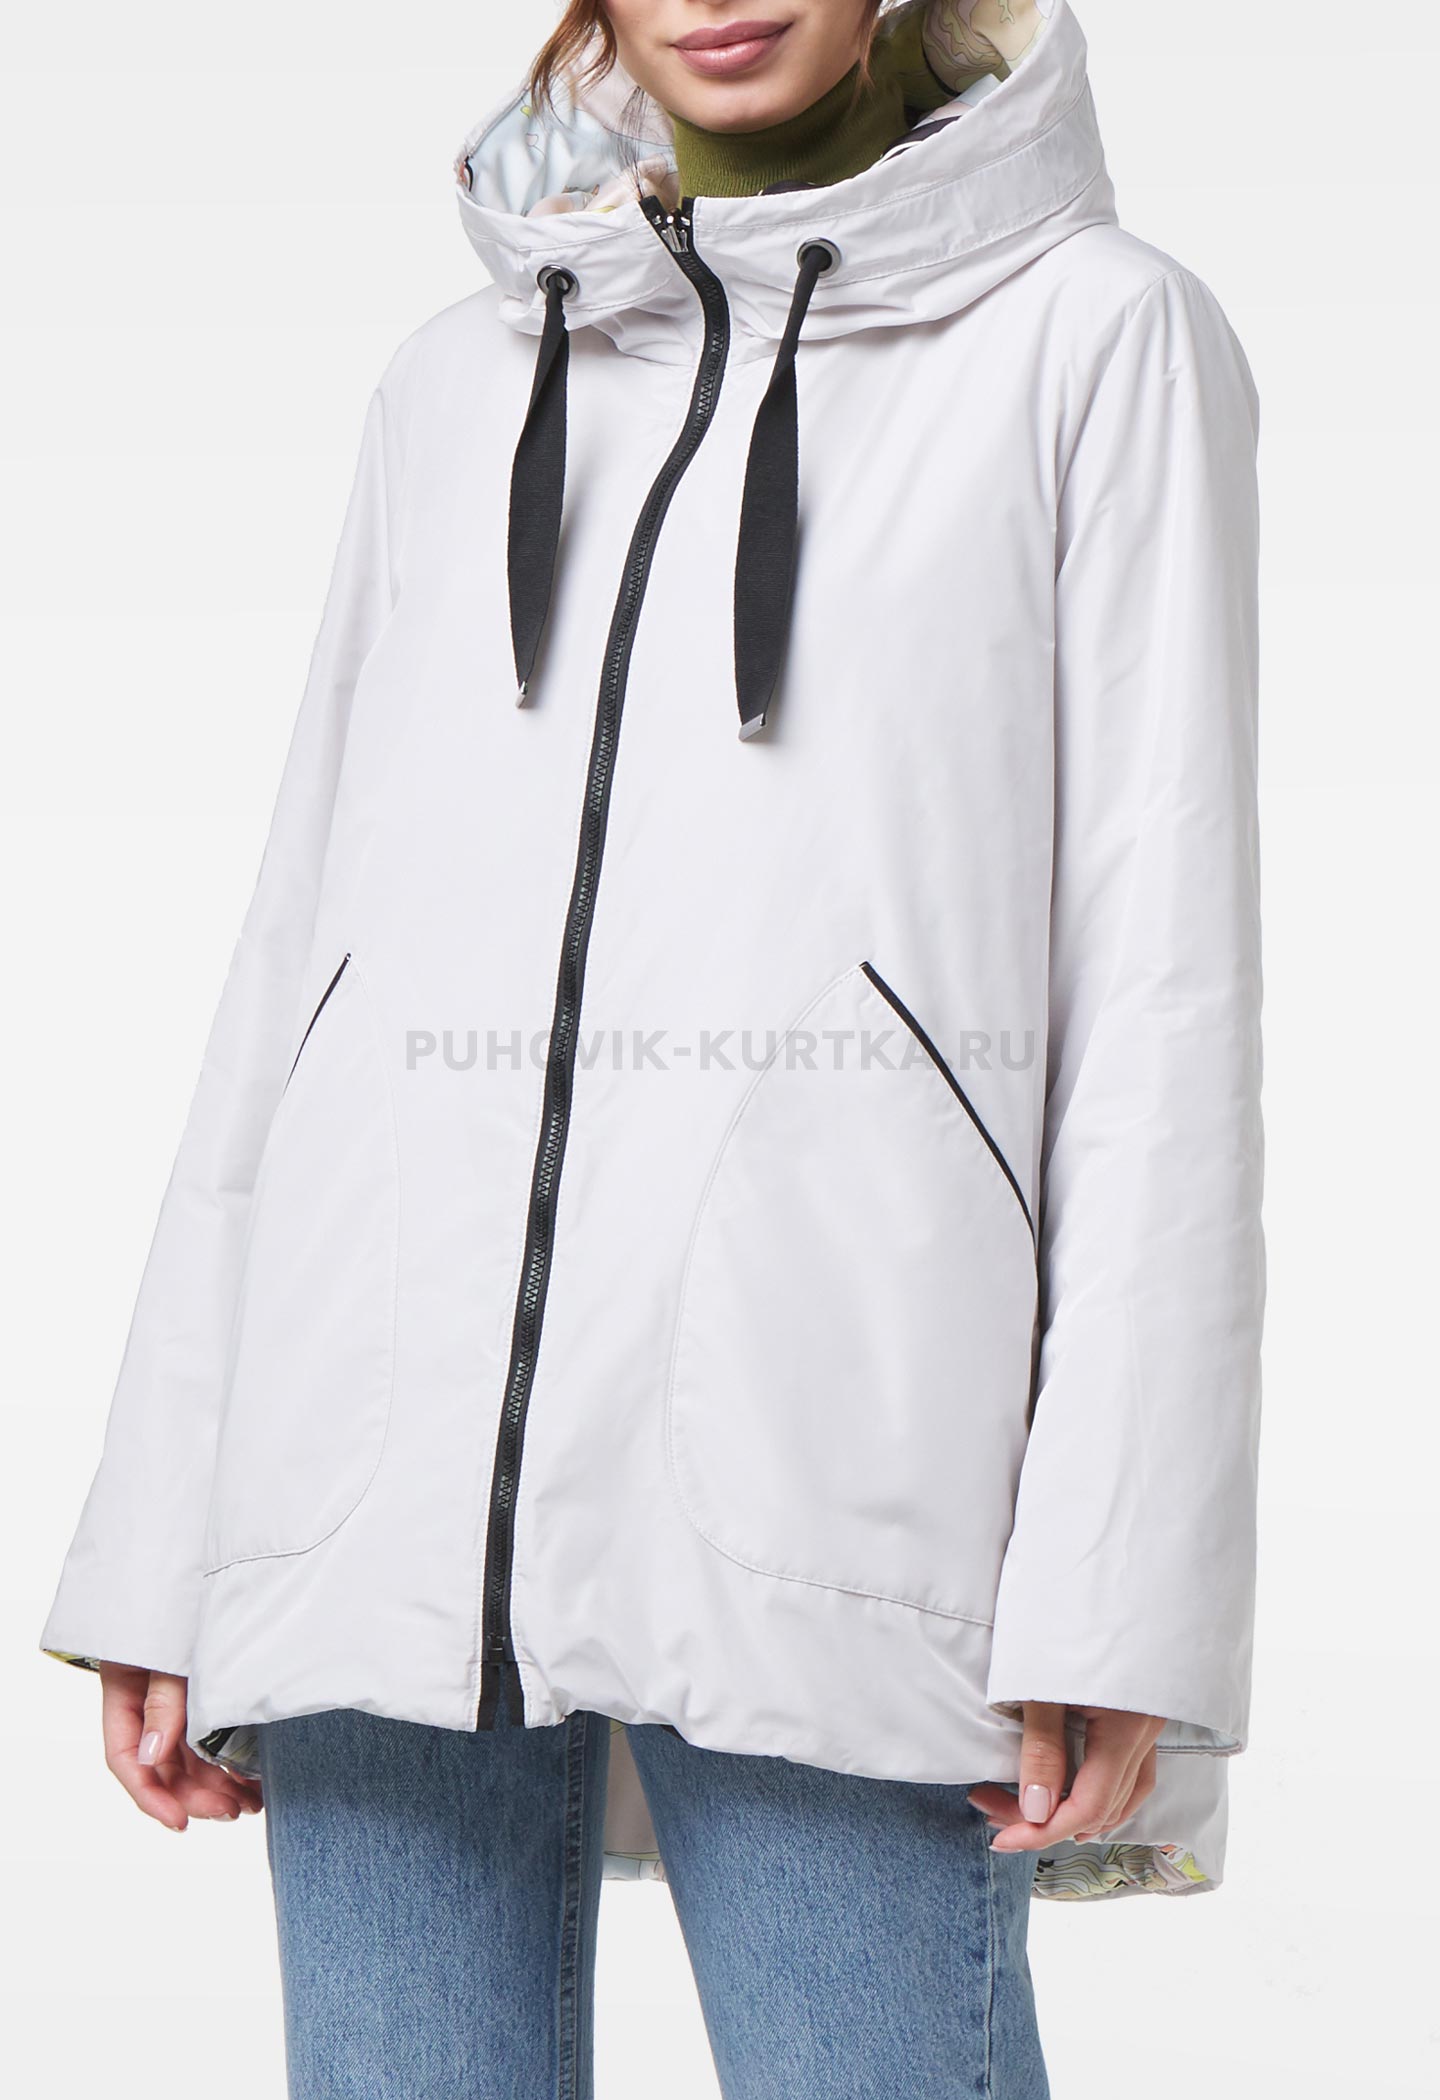 Куртка двухсторонняя Dixi Coat 4410-115 (42)